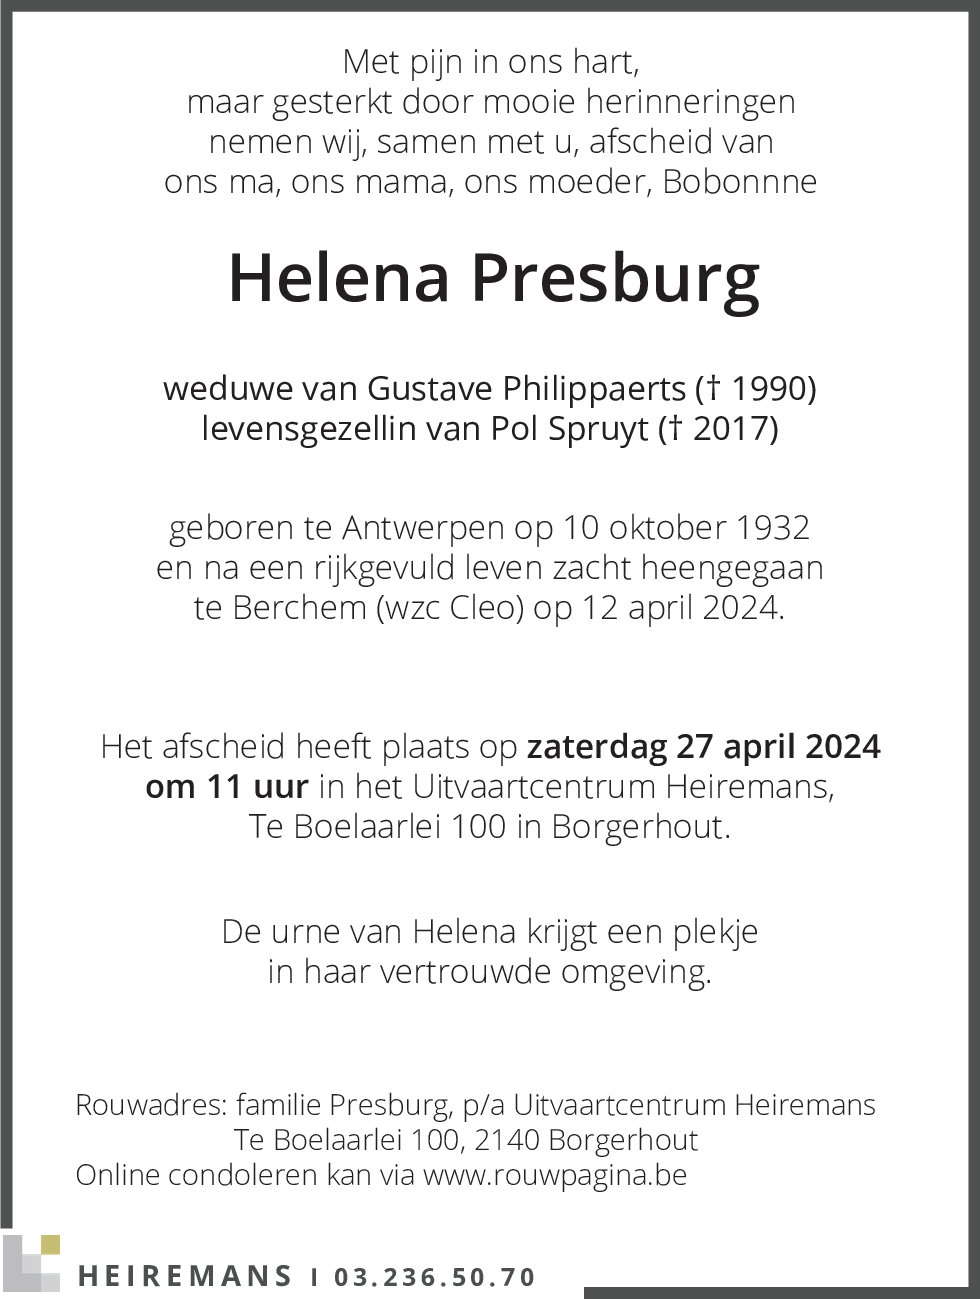 Helena Presburg